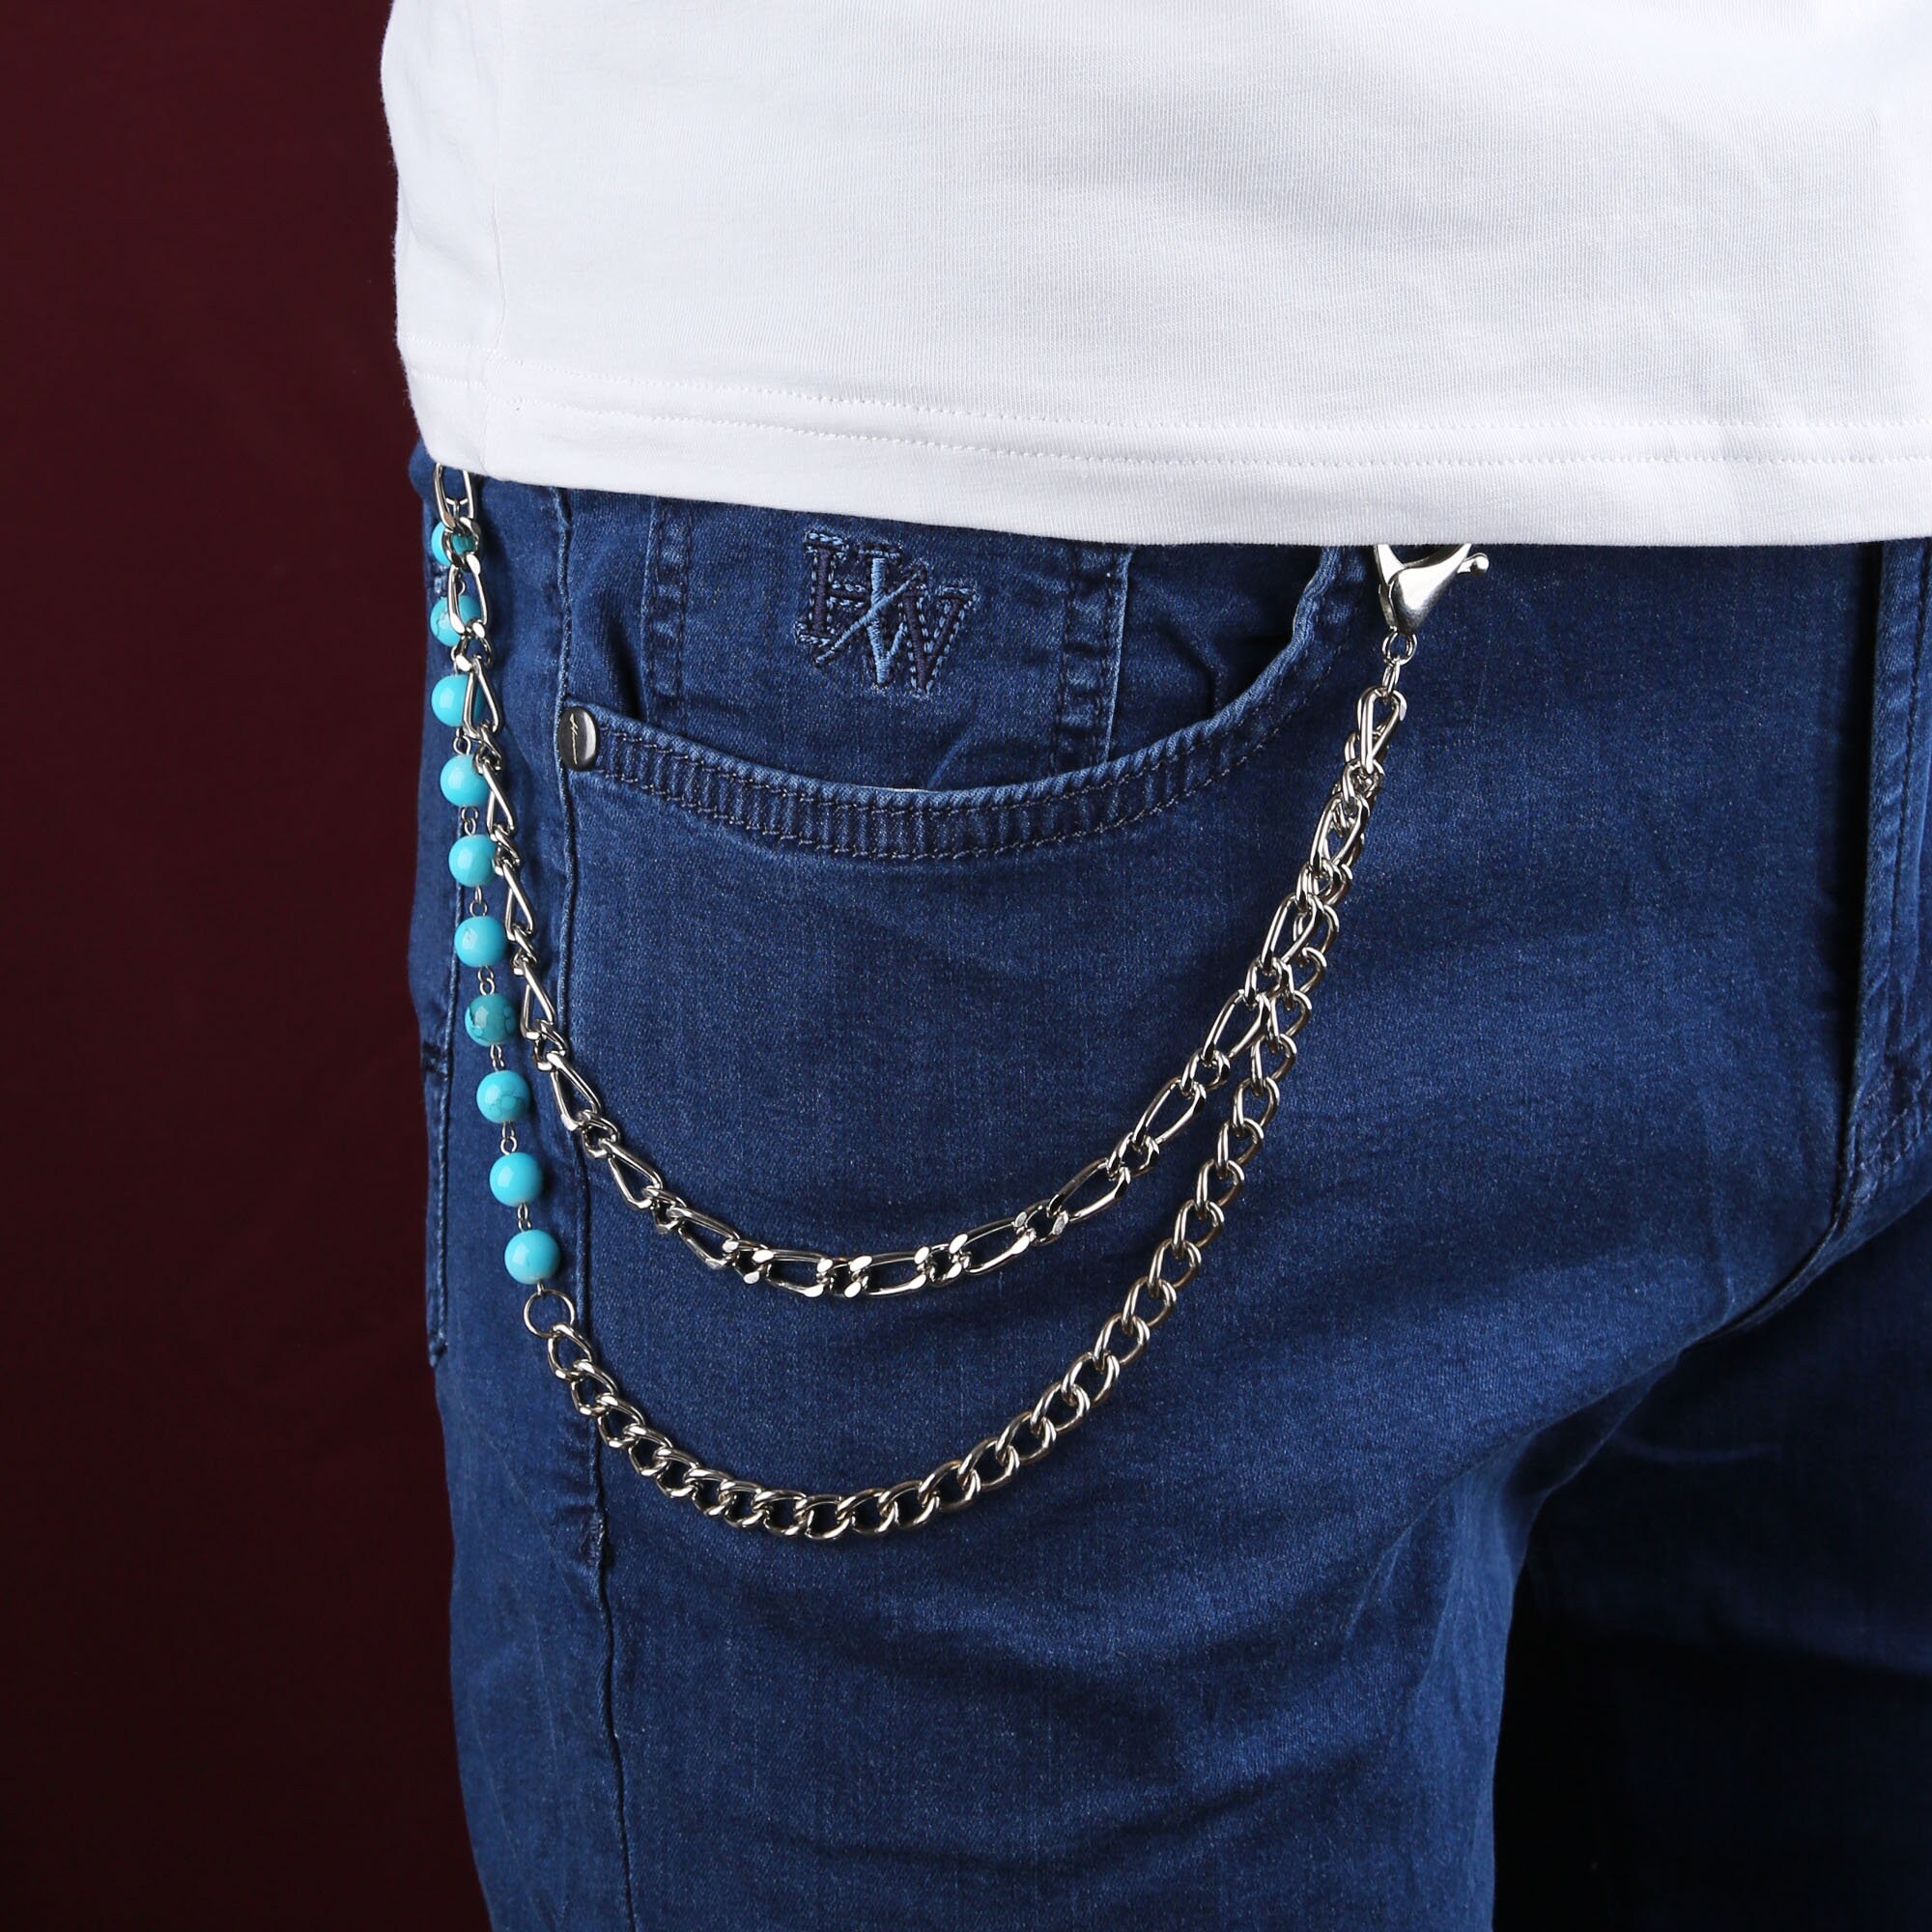 Punk Hip-hop Trendy Single/Three Layer Belt Key Chain Waist Pants Chain  Jeans Long Metal Clothing Accessories Jewelry Fashion